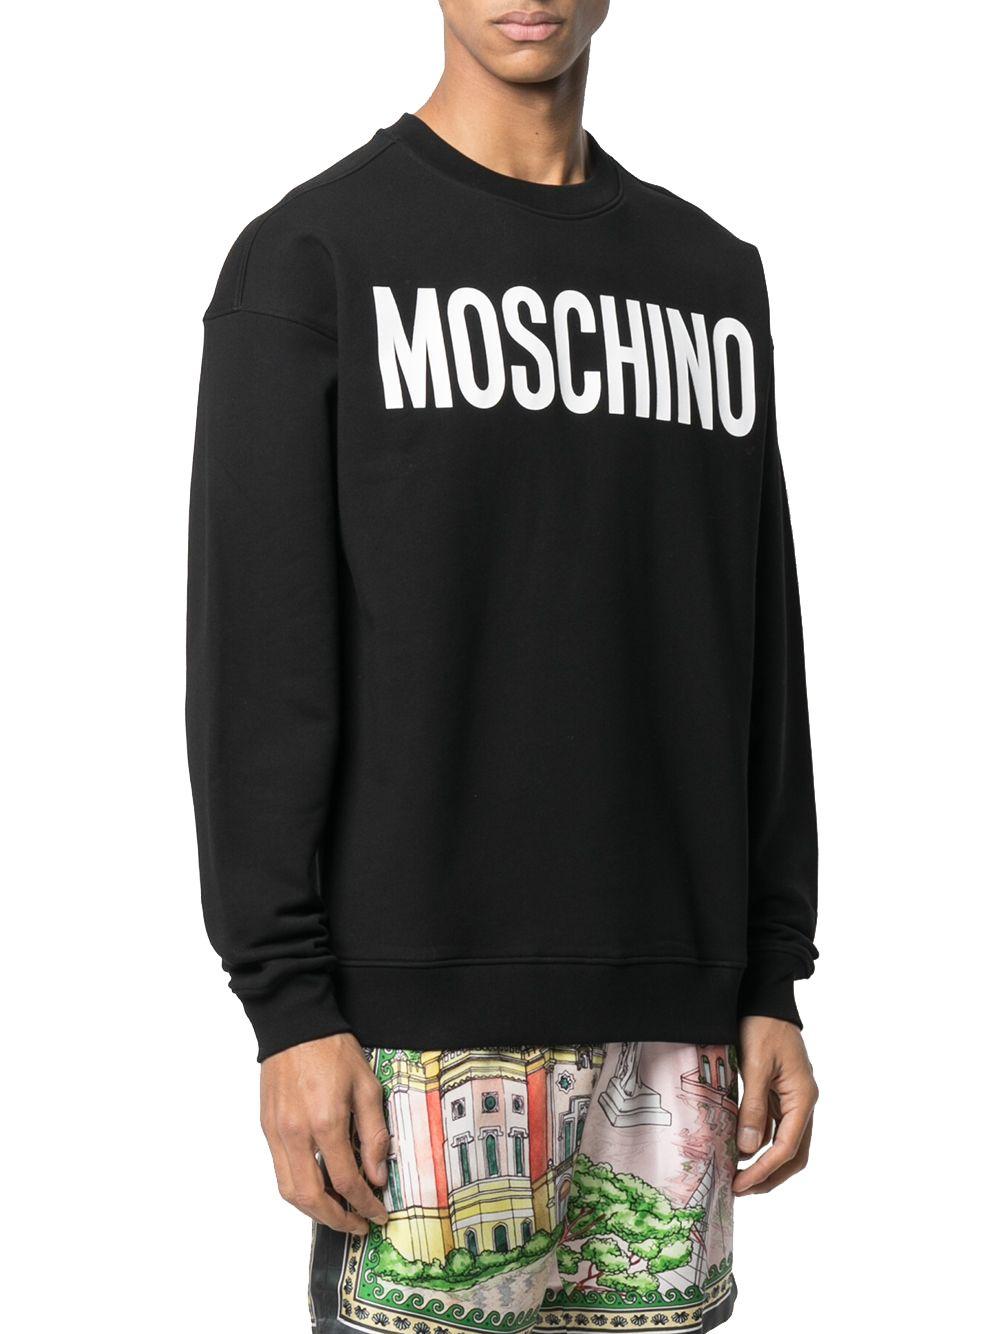 Moschino Cotton Sweatshirt in Black for Men - Lyst